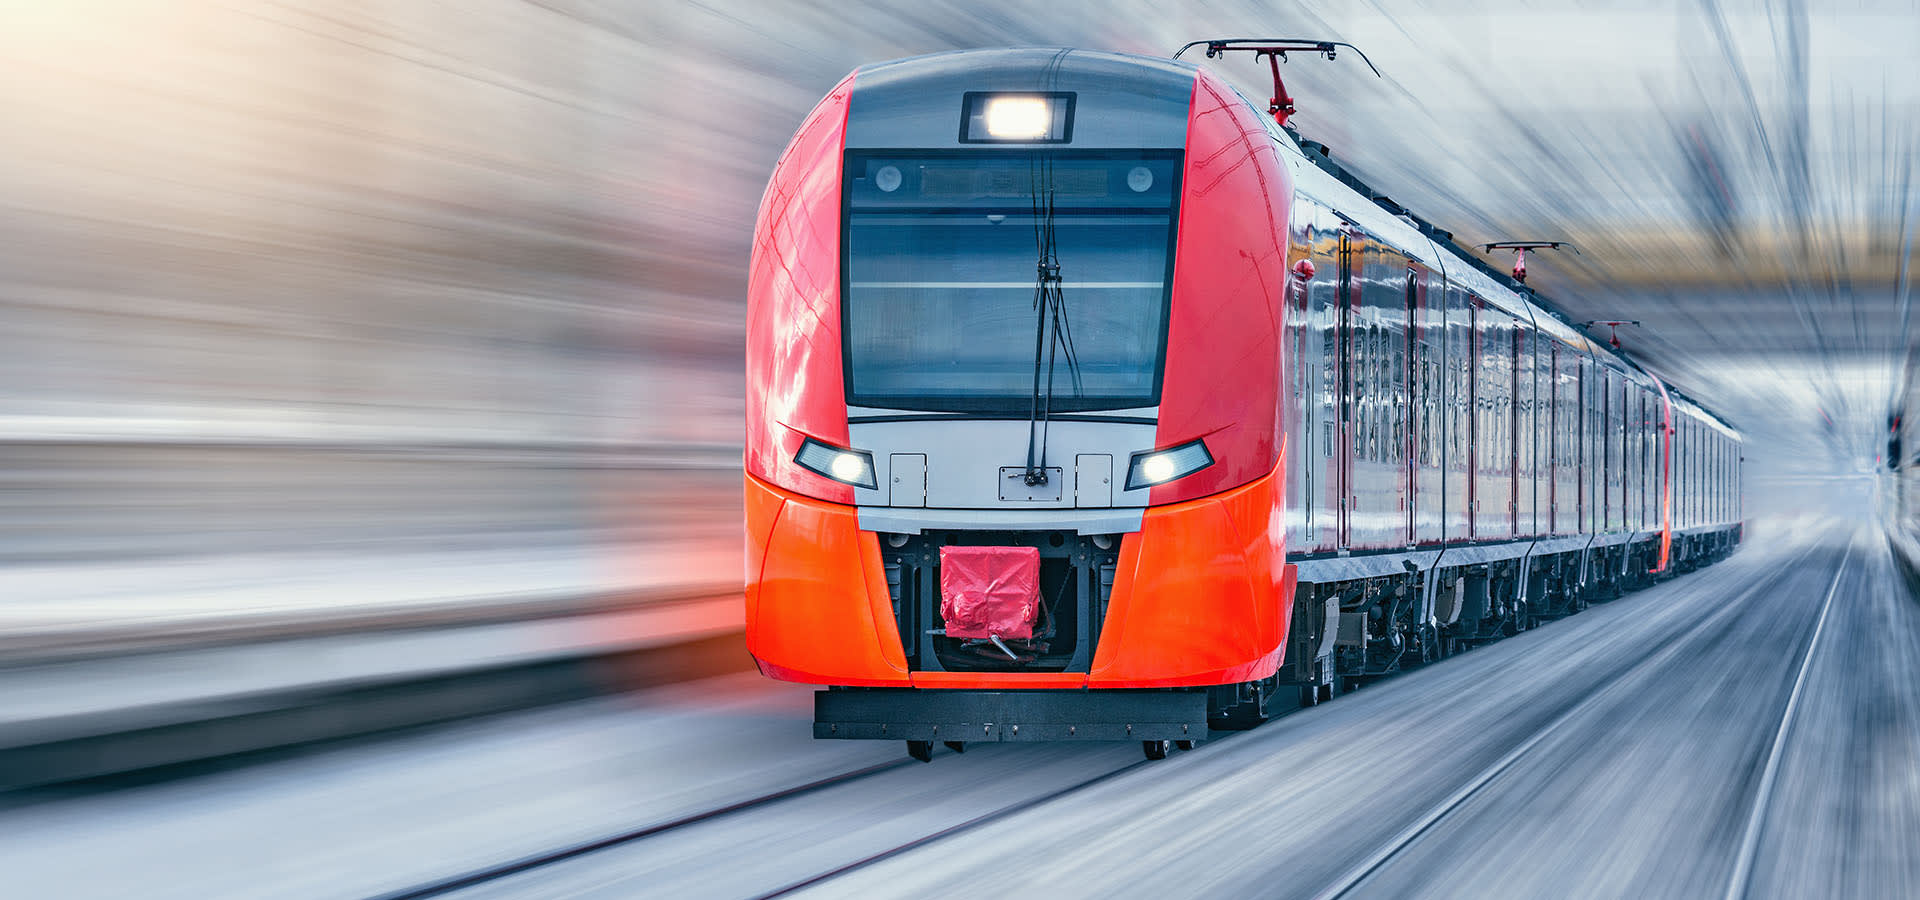 High-Speed Train Passenger Rail Transport